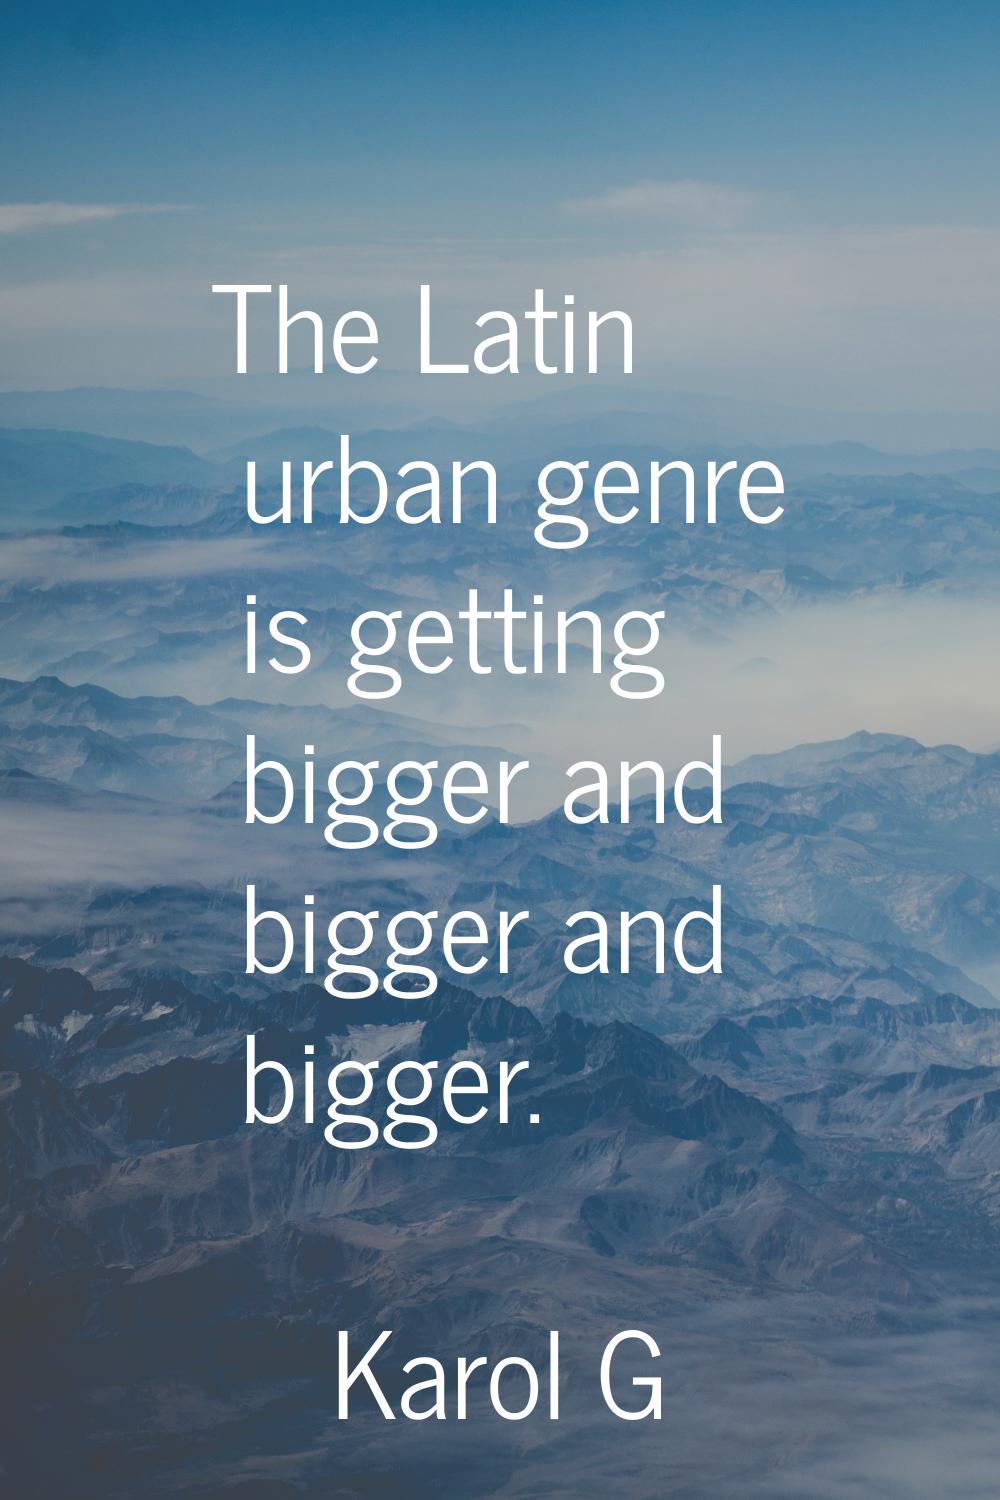 The Latin urban genre is getting bigger and bigger and bigger.